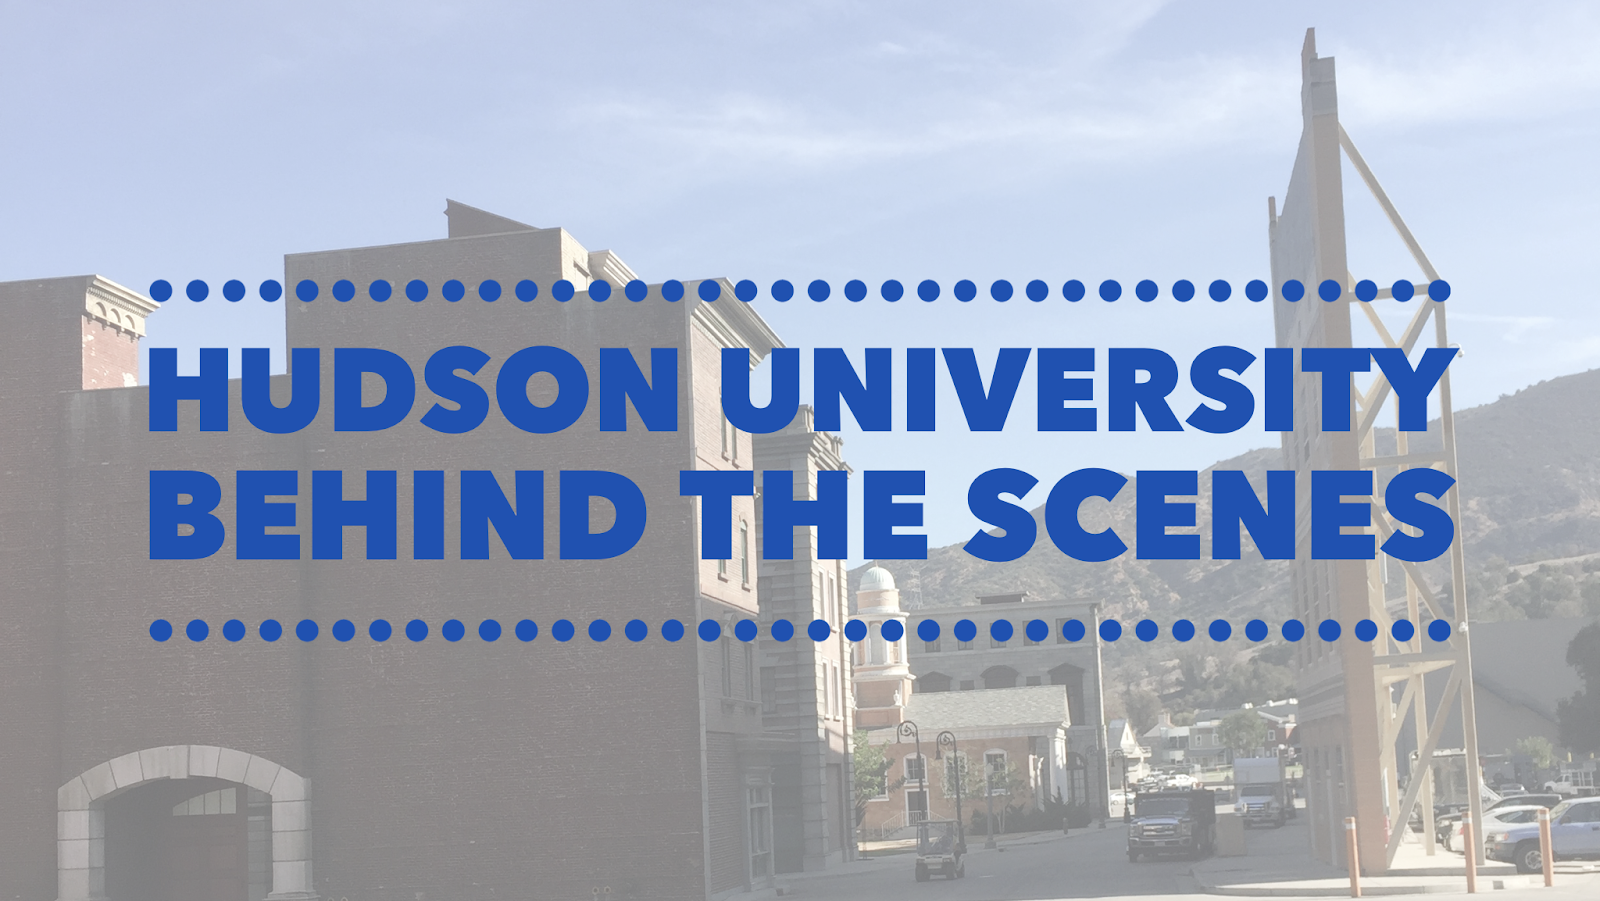 Hudson University Behind the Scenes